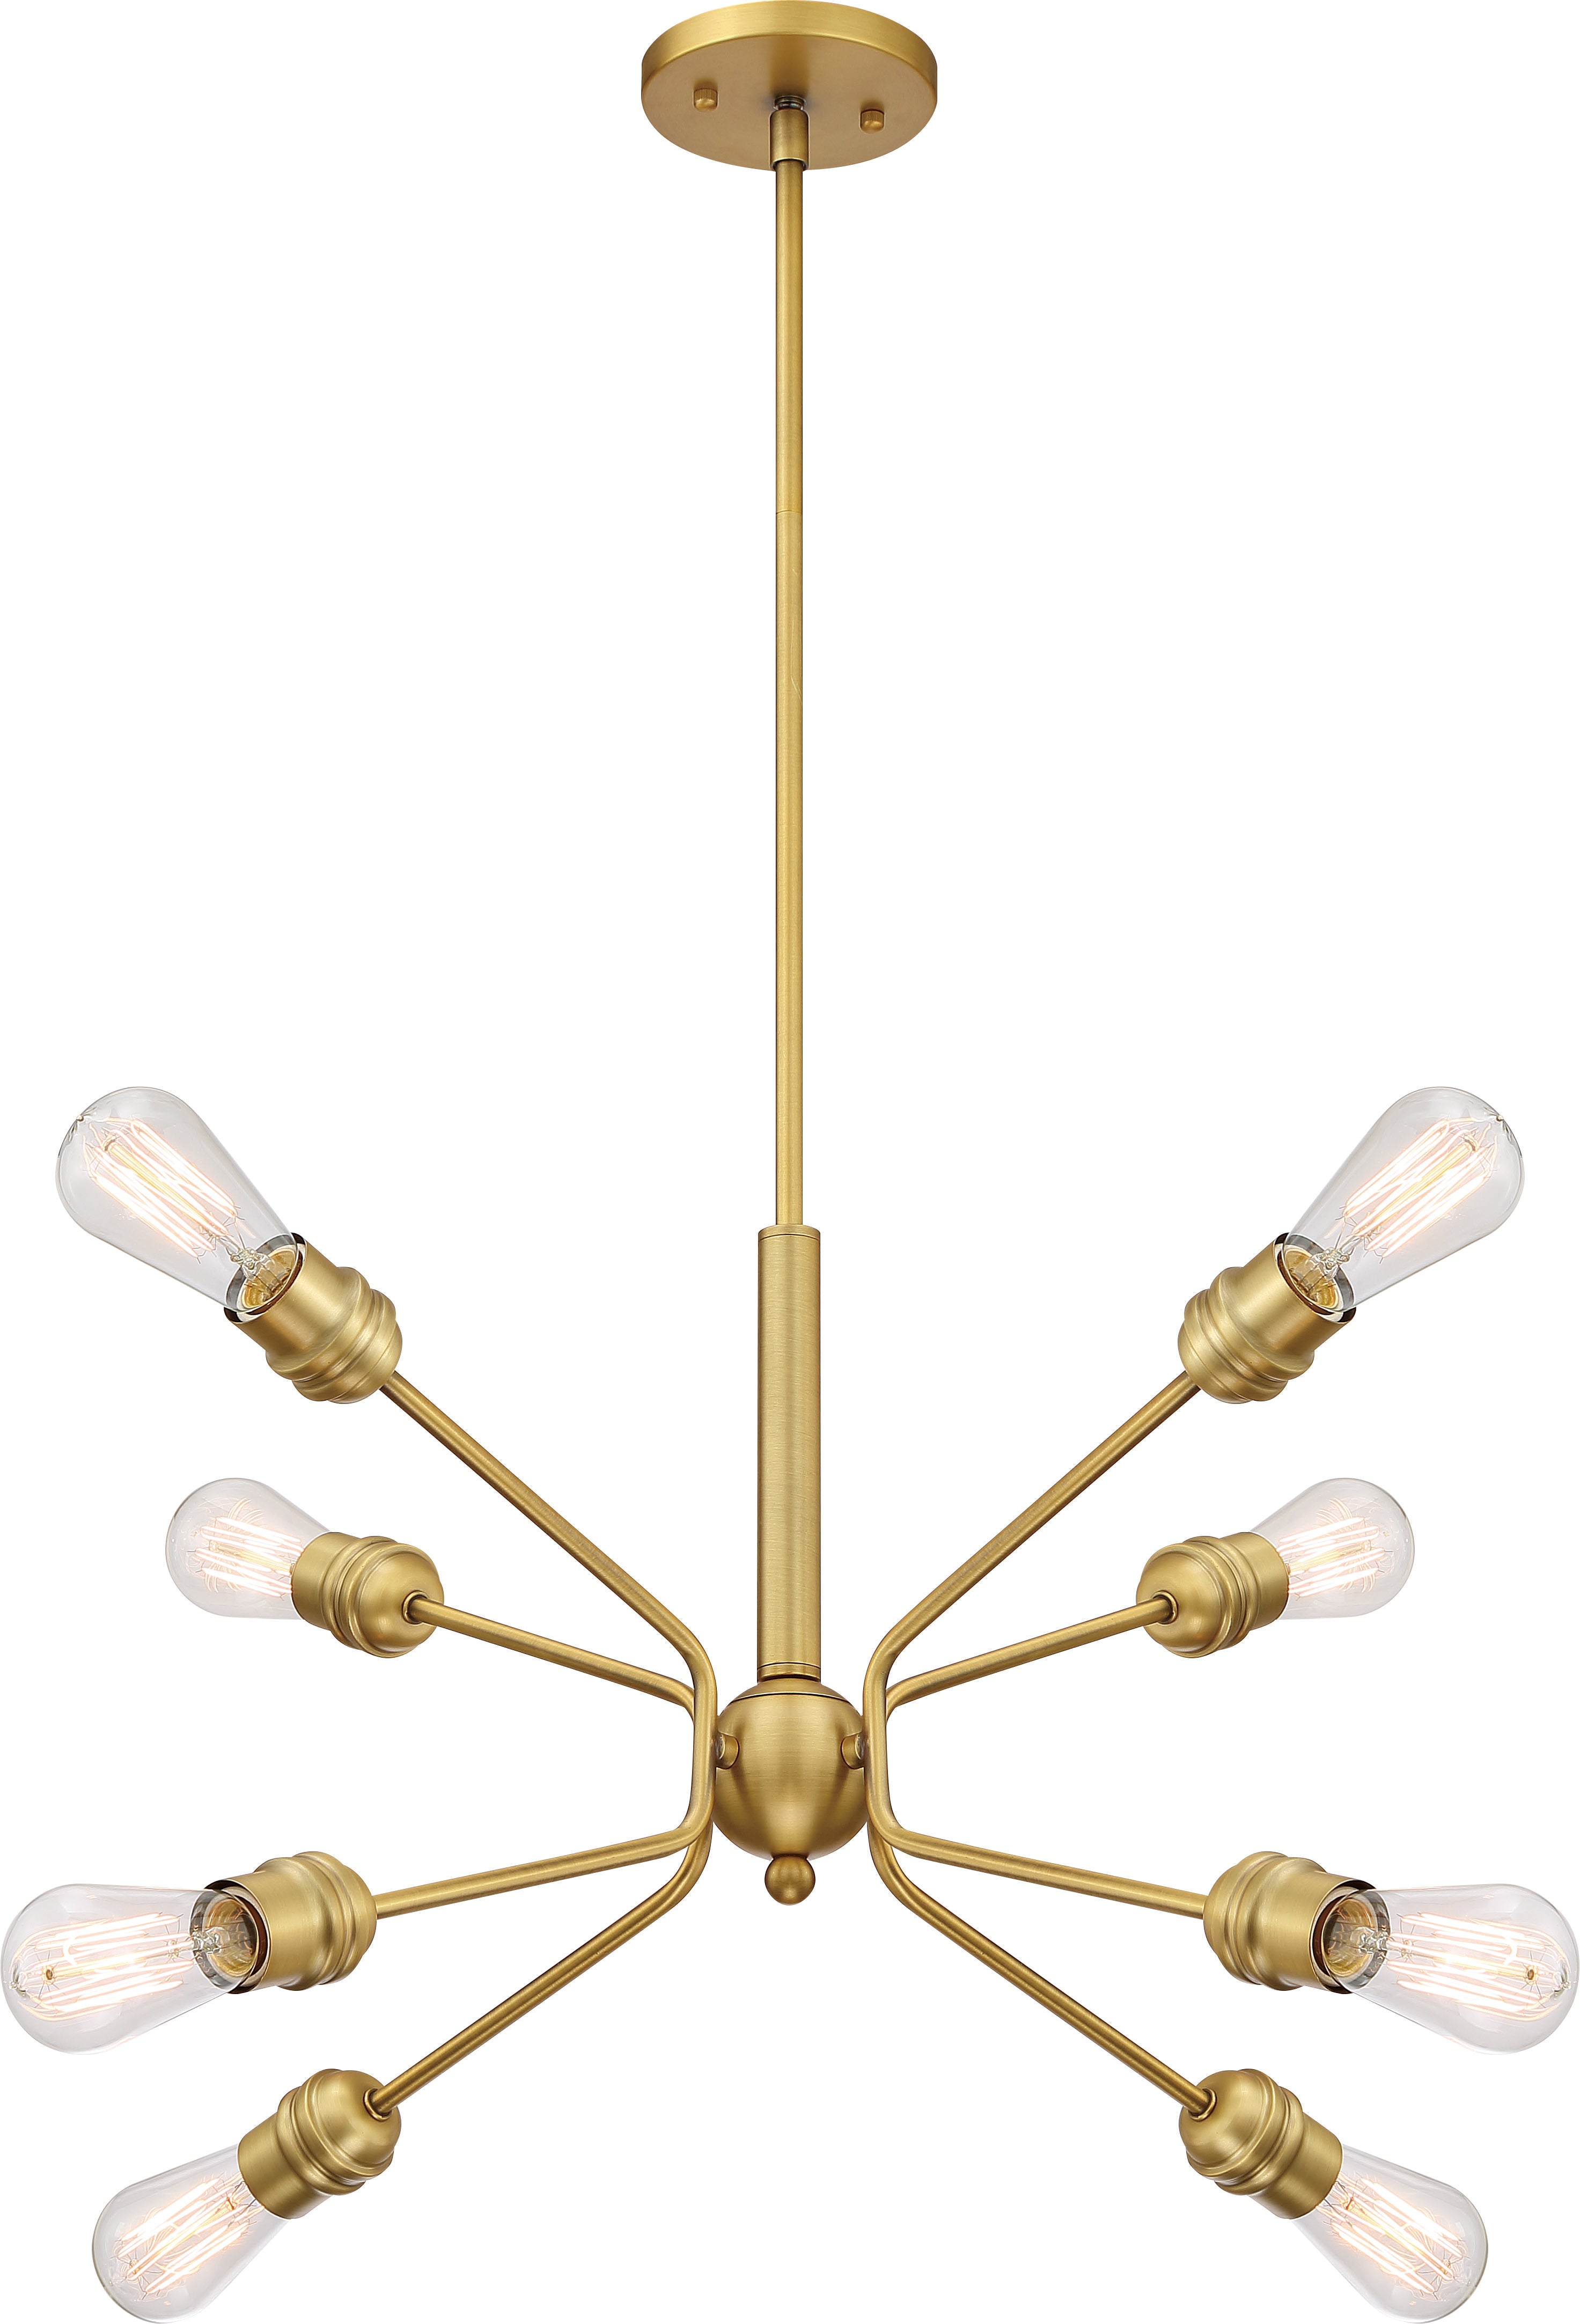 Faraday 8 Light Pendant Fixture - Brushed Brass